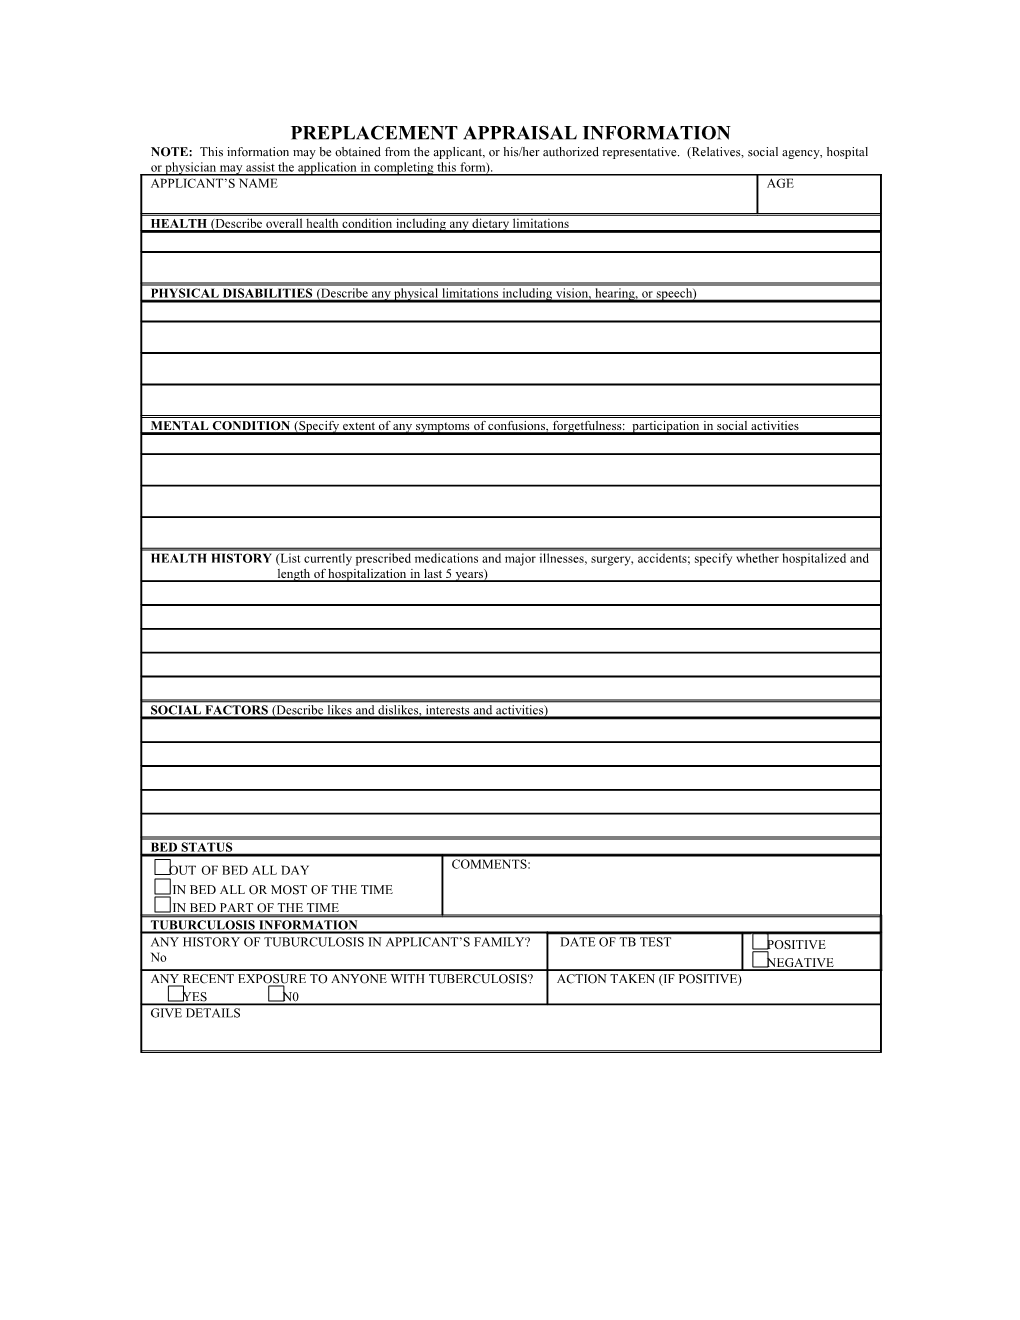 Preplacement Appraisal Information